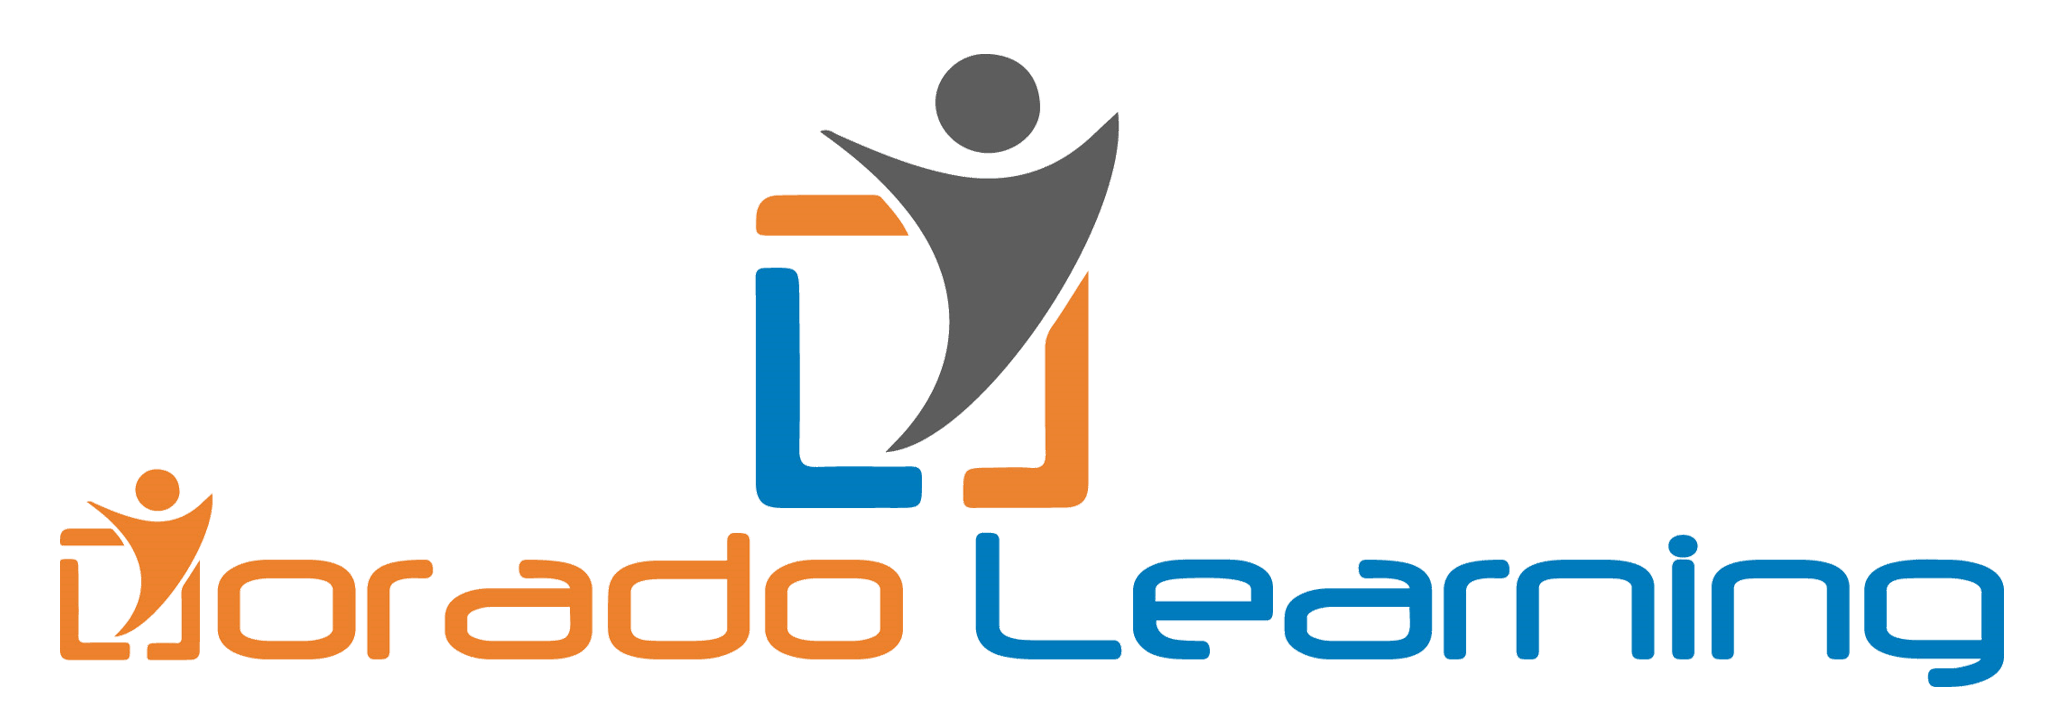 Corporate Training Logo - MS Project - Corporate Training - Dorado Learning India